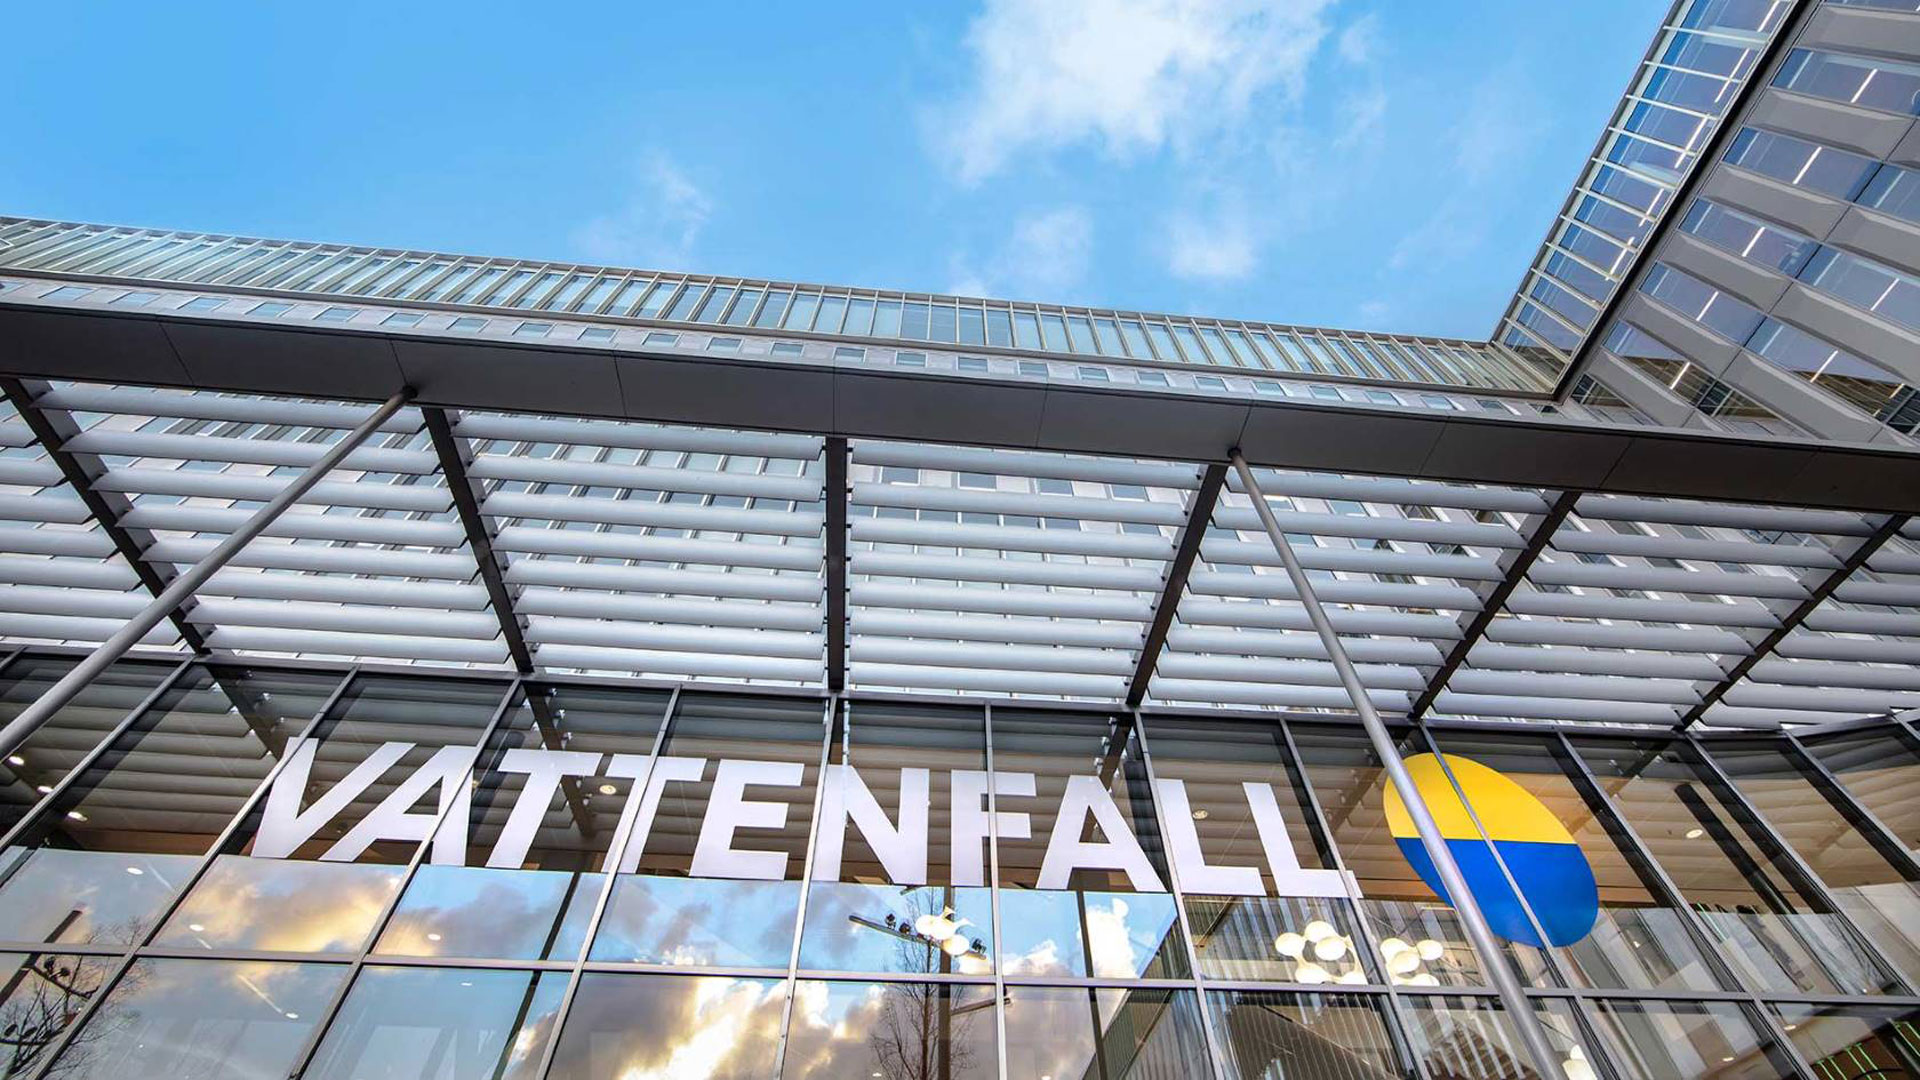 Vattenfall Amsterdam headquarters